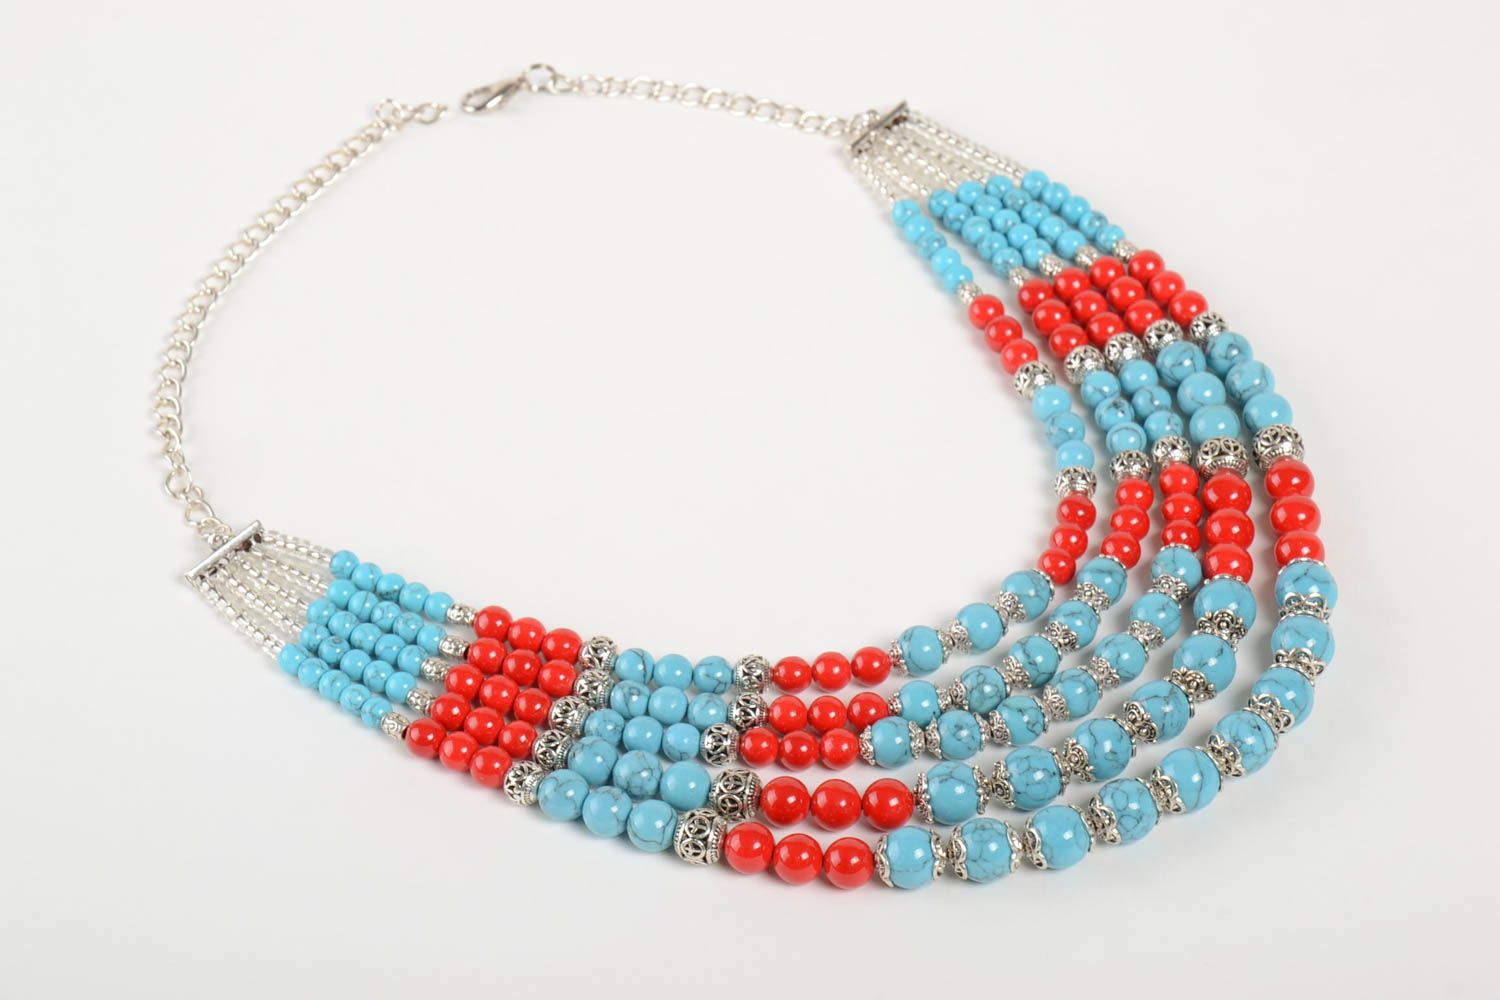 Bead necklace handmade jewelry stone necklace ethnic jewelry turquoise necklace photo 2